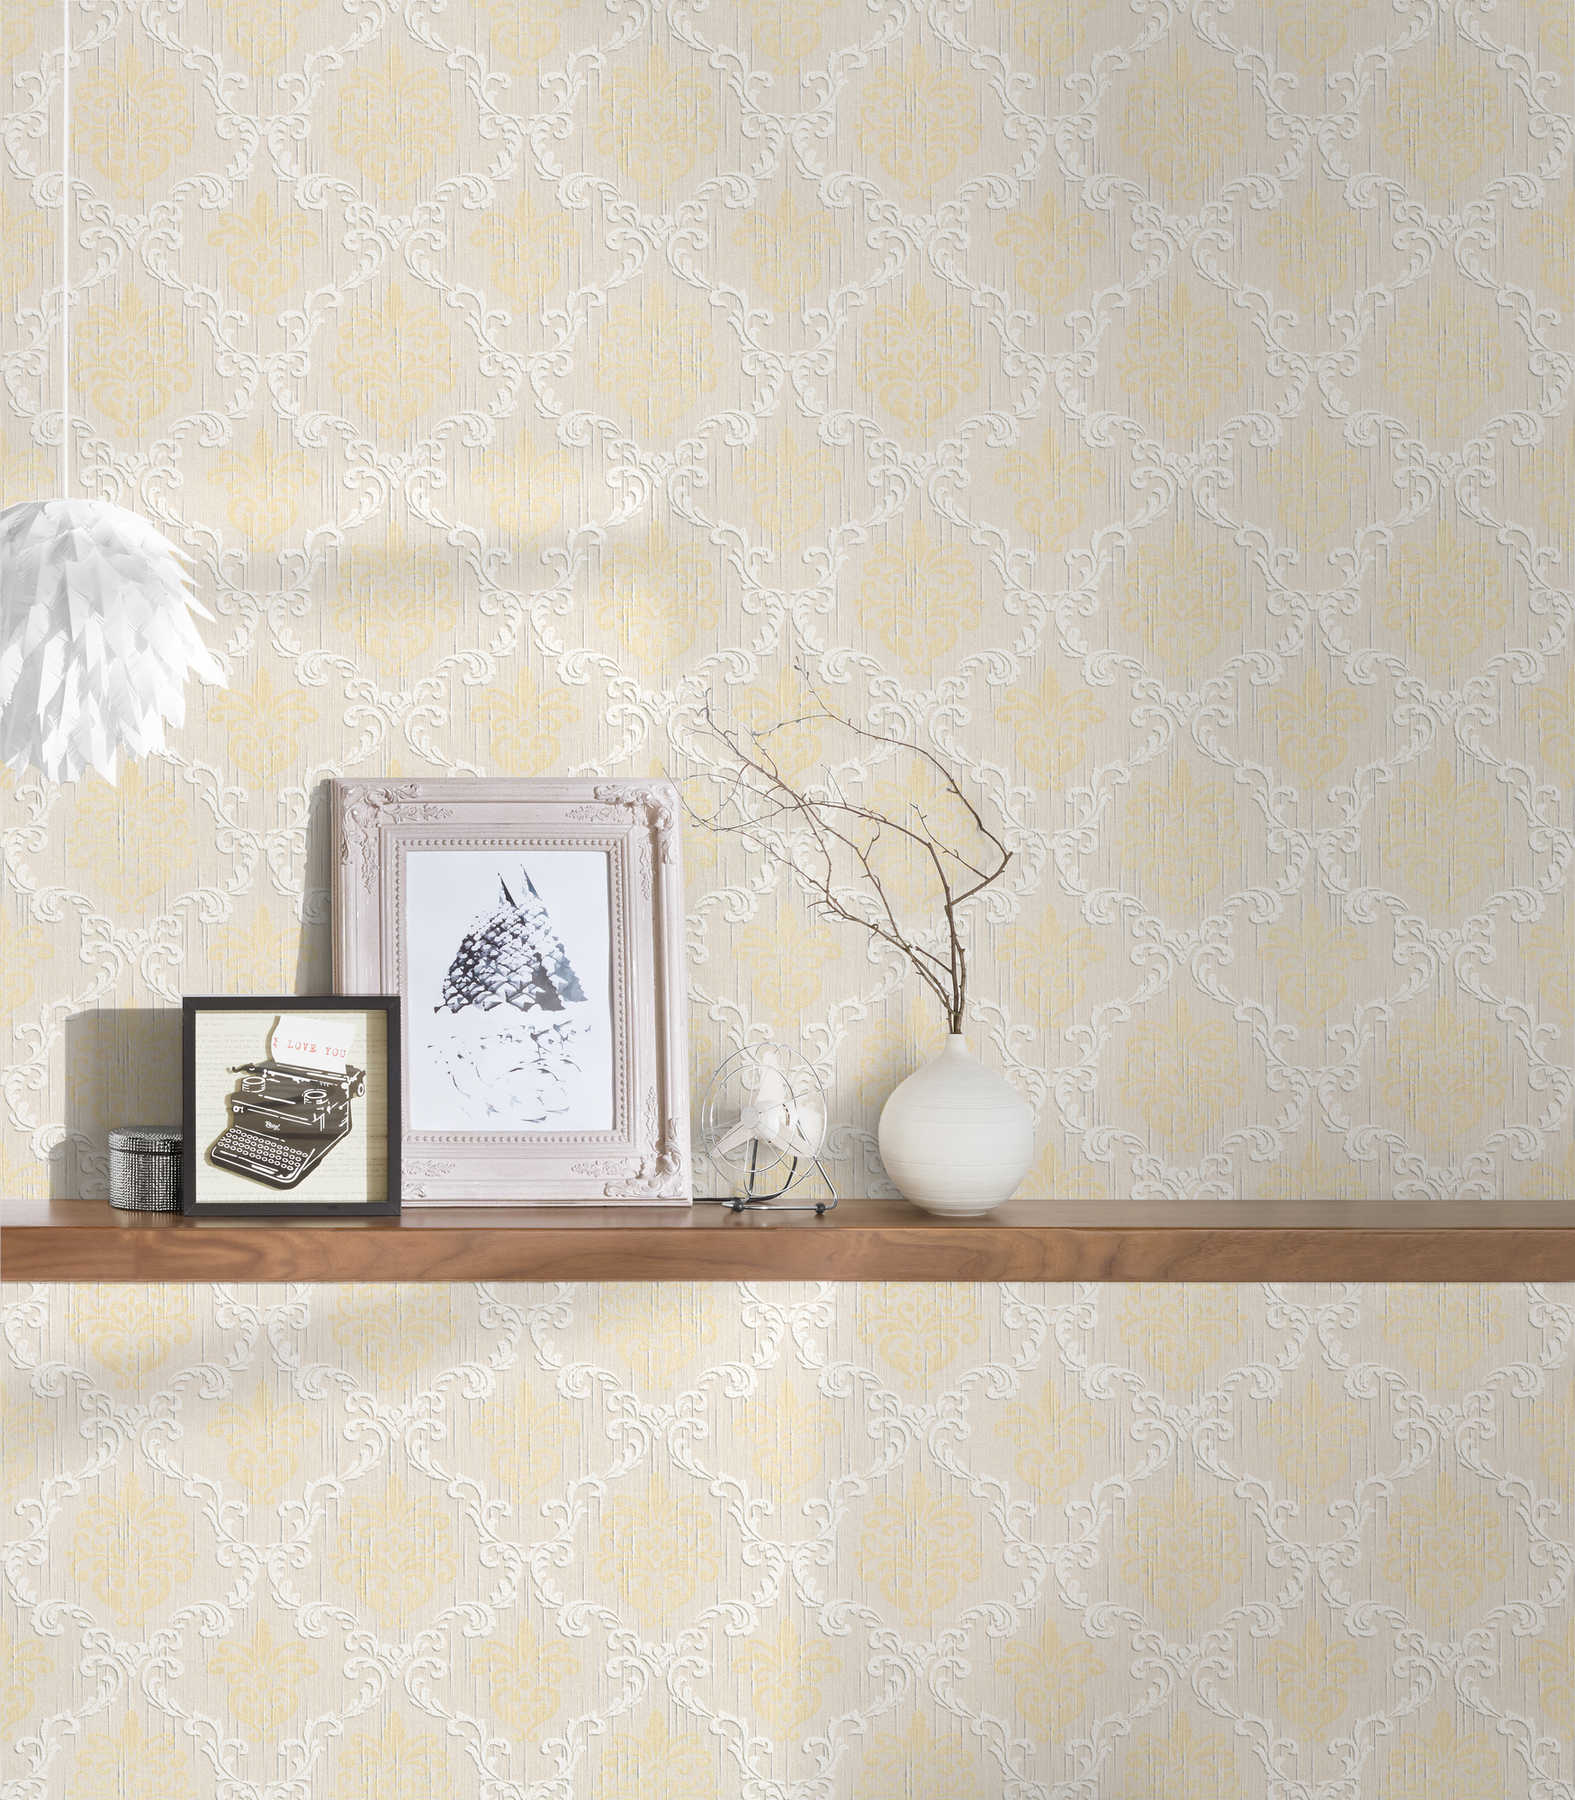             Classic ornament wallpaper with texture effect - beige, metallic
        